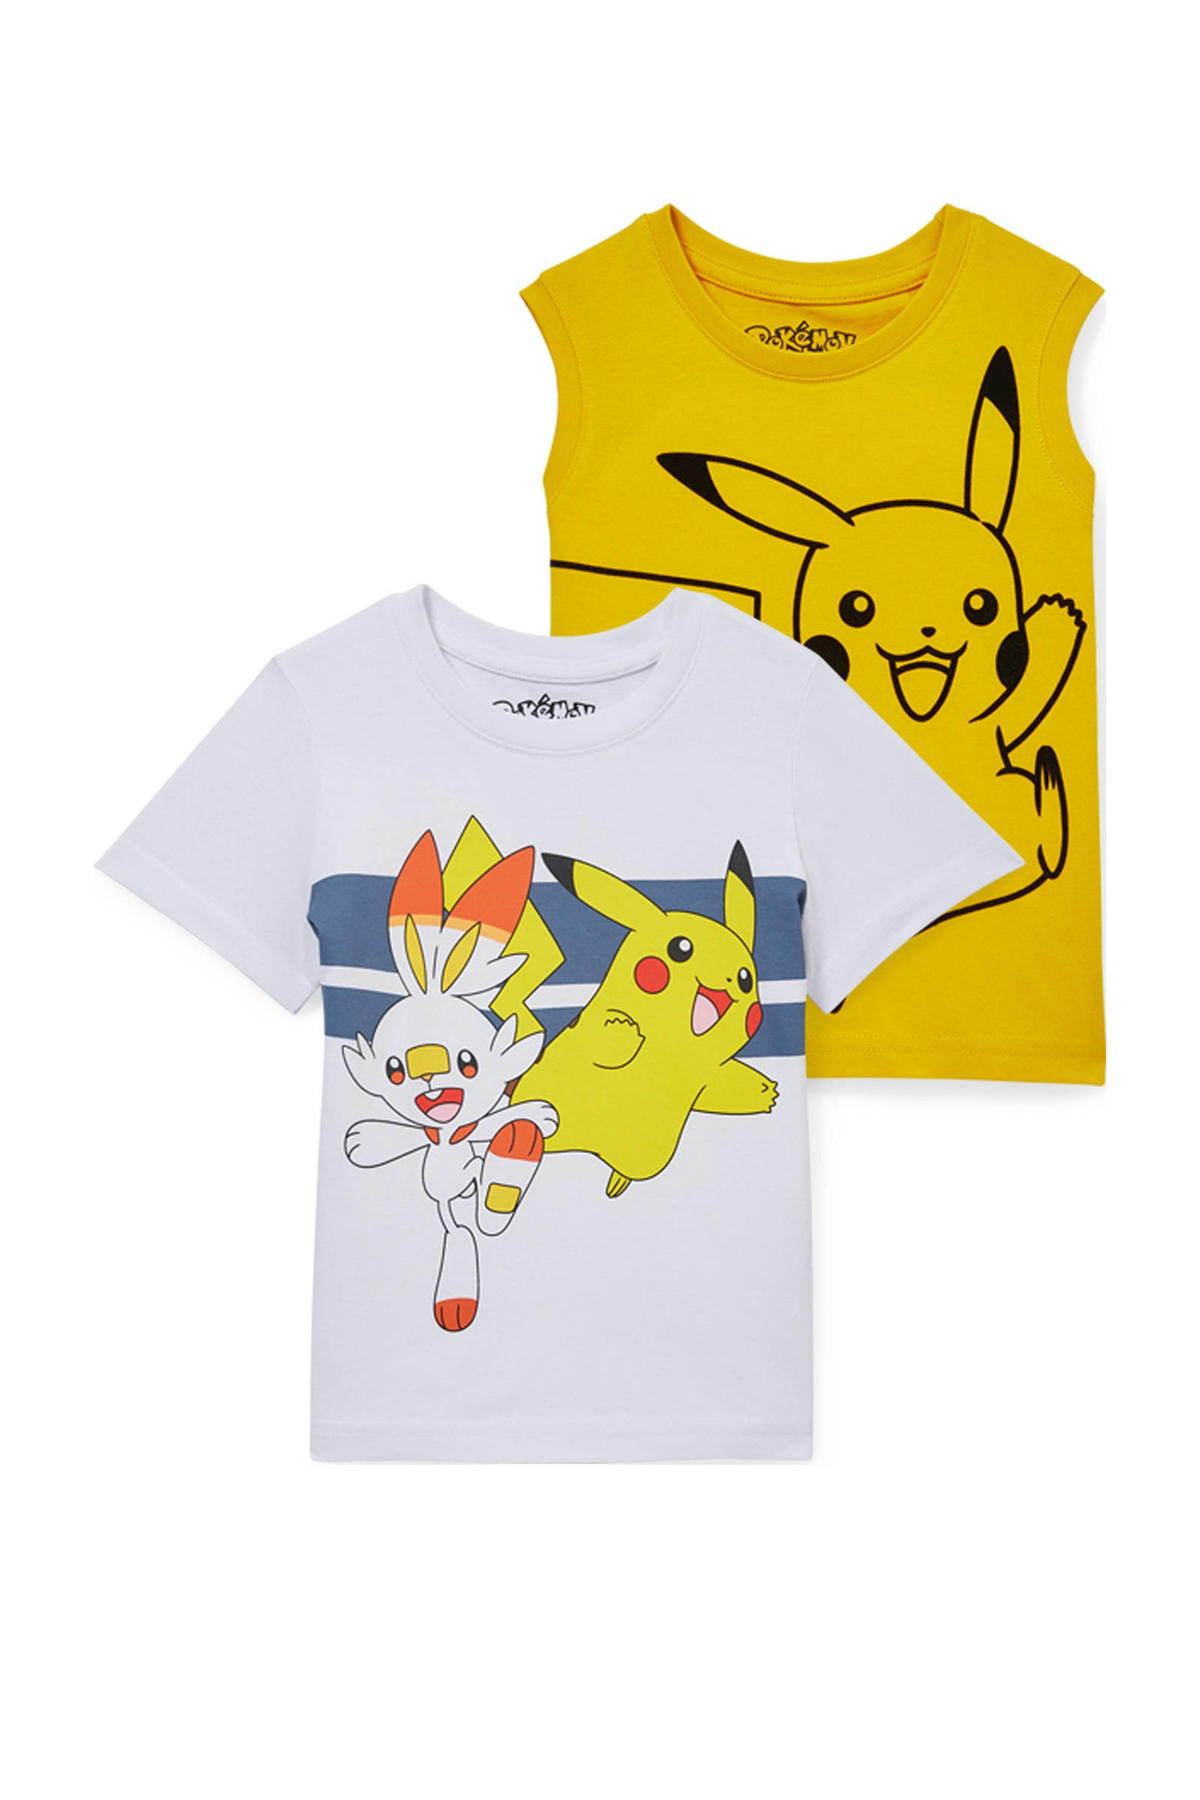 los van Wierook roman C&A Pokemon T-shirt + singlet geel/wit | wehkamp